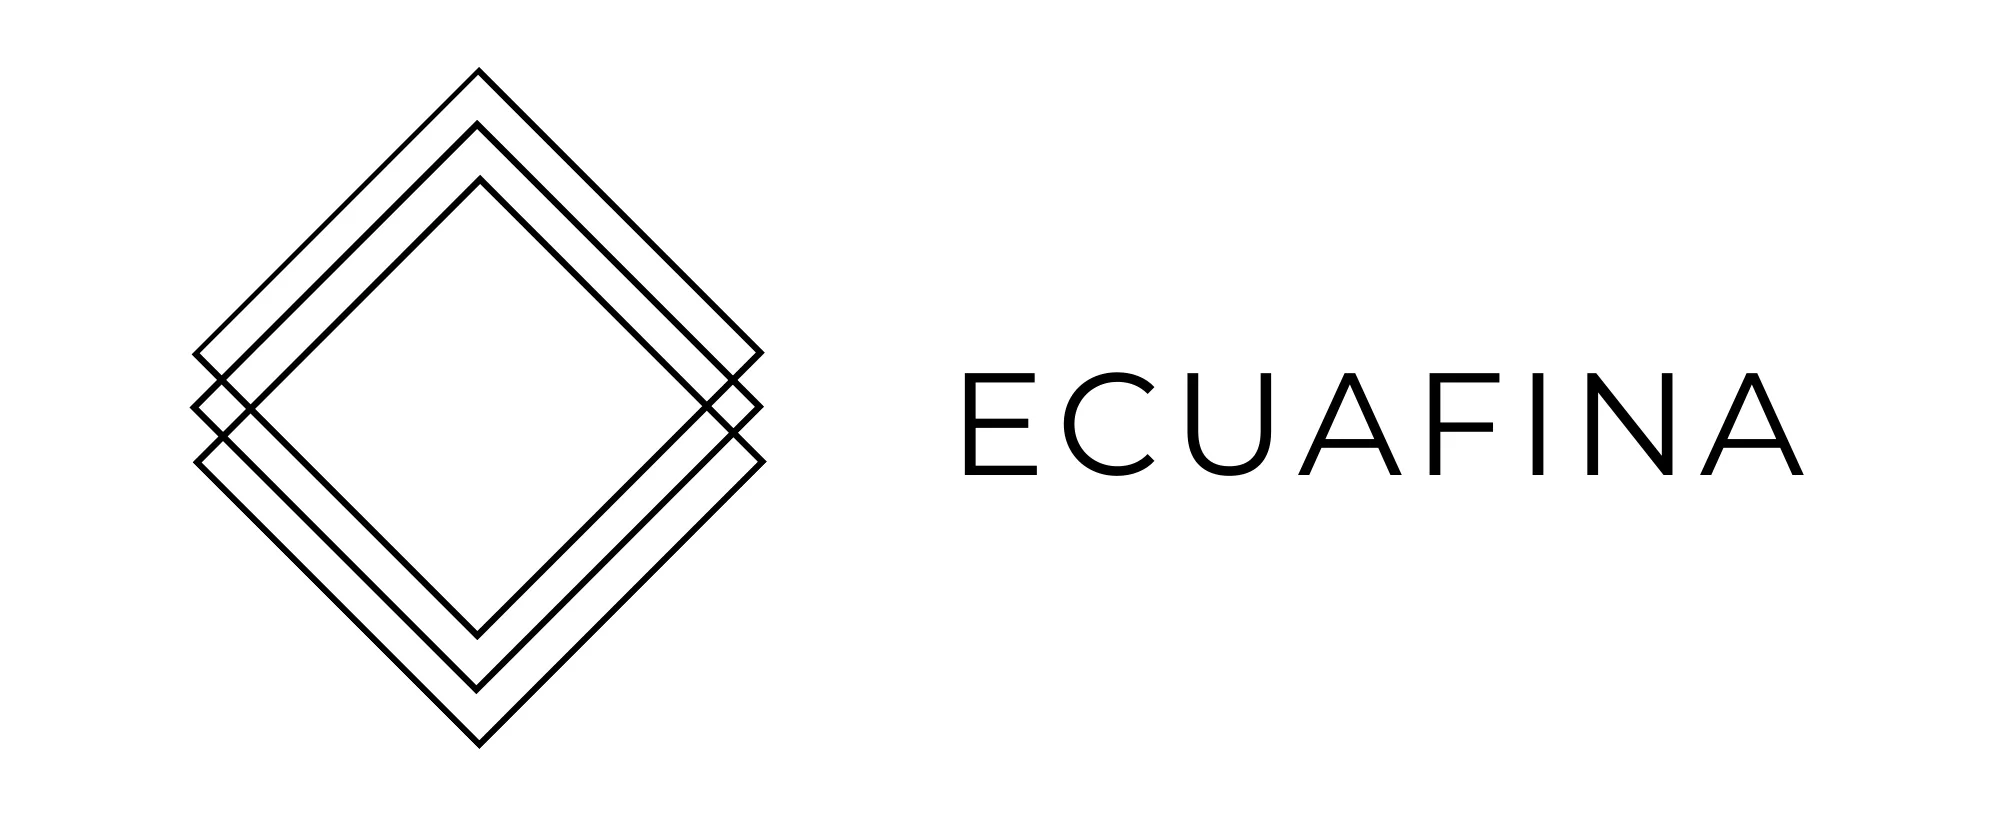 Ecuafina logo